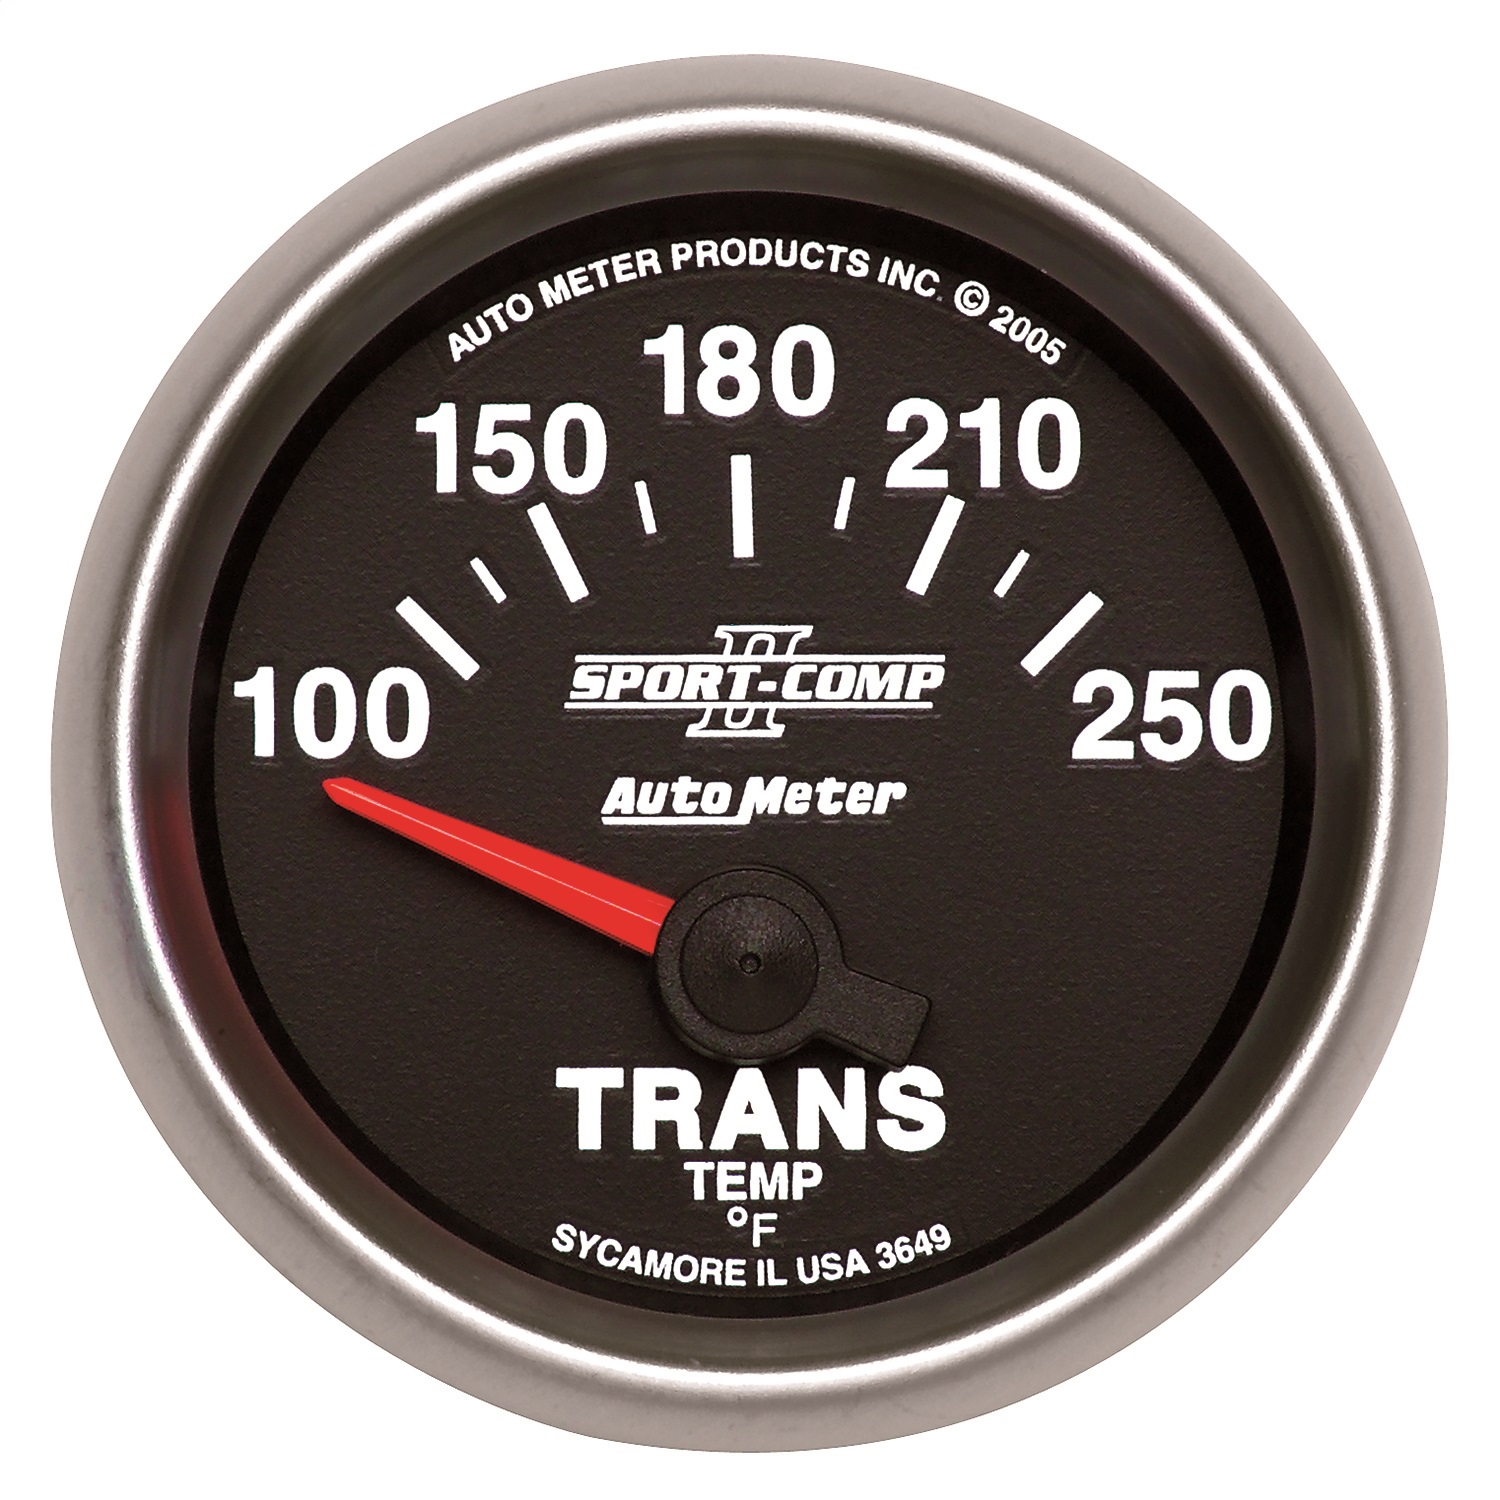 Auto Meter Auto Meter 3649 Sport-Comp II; Electric Transmission Temperature Gauge